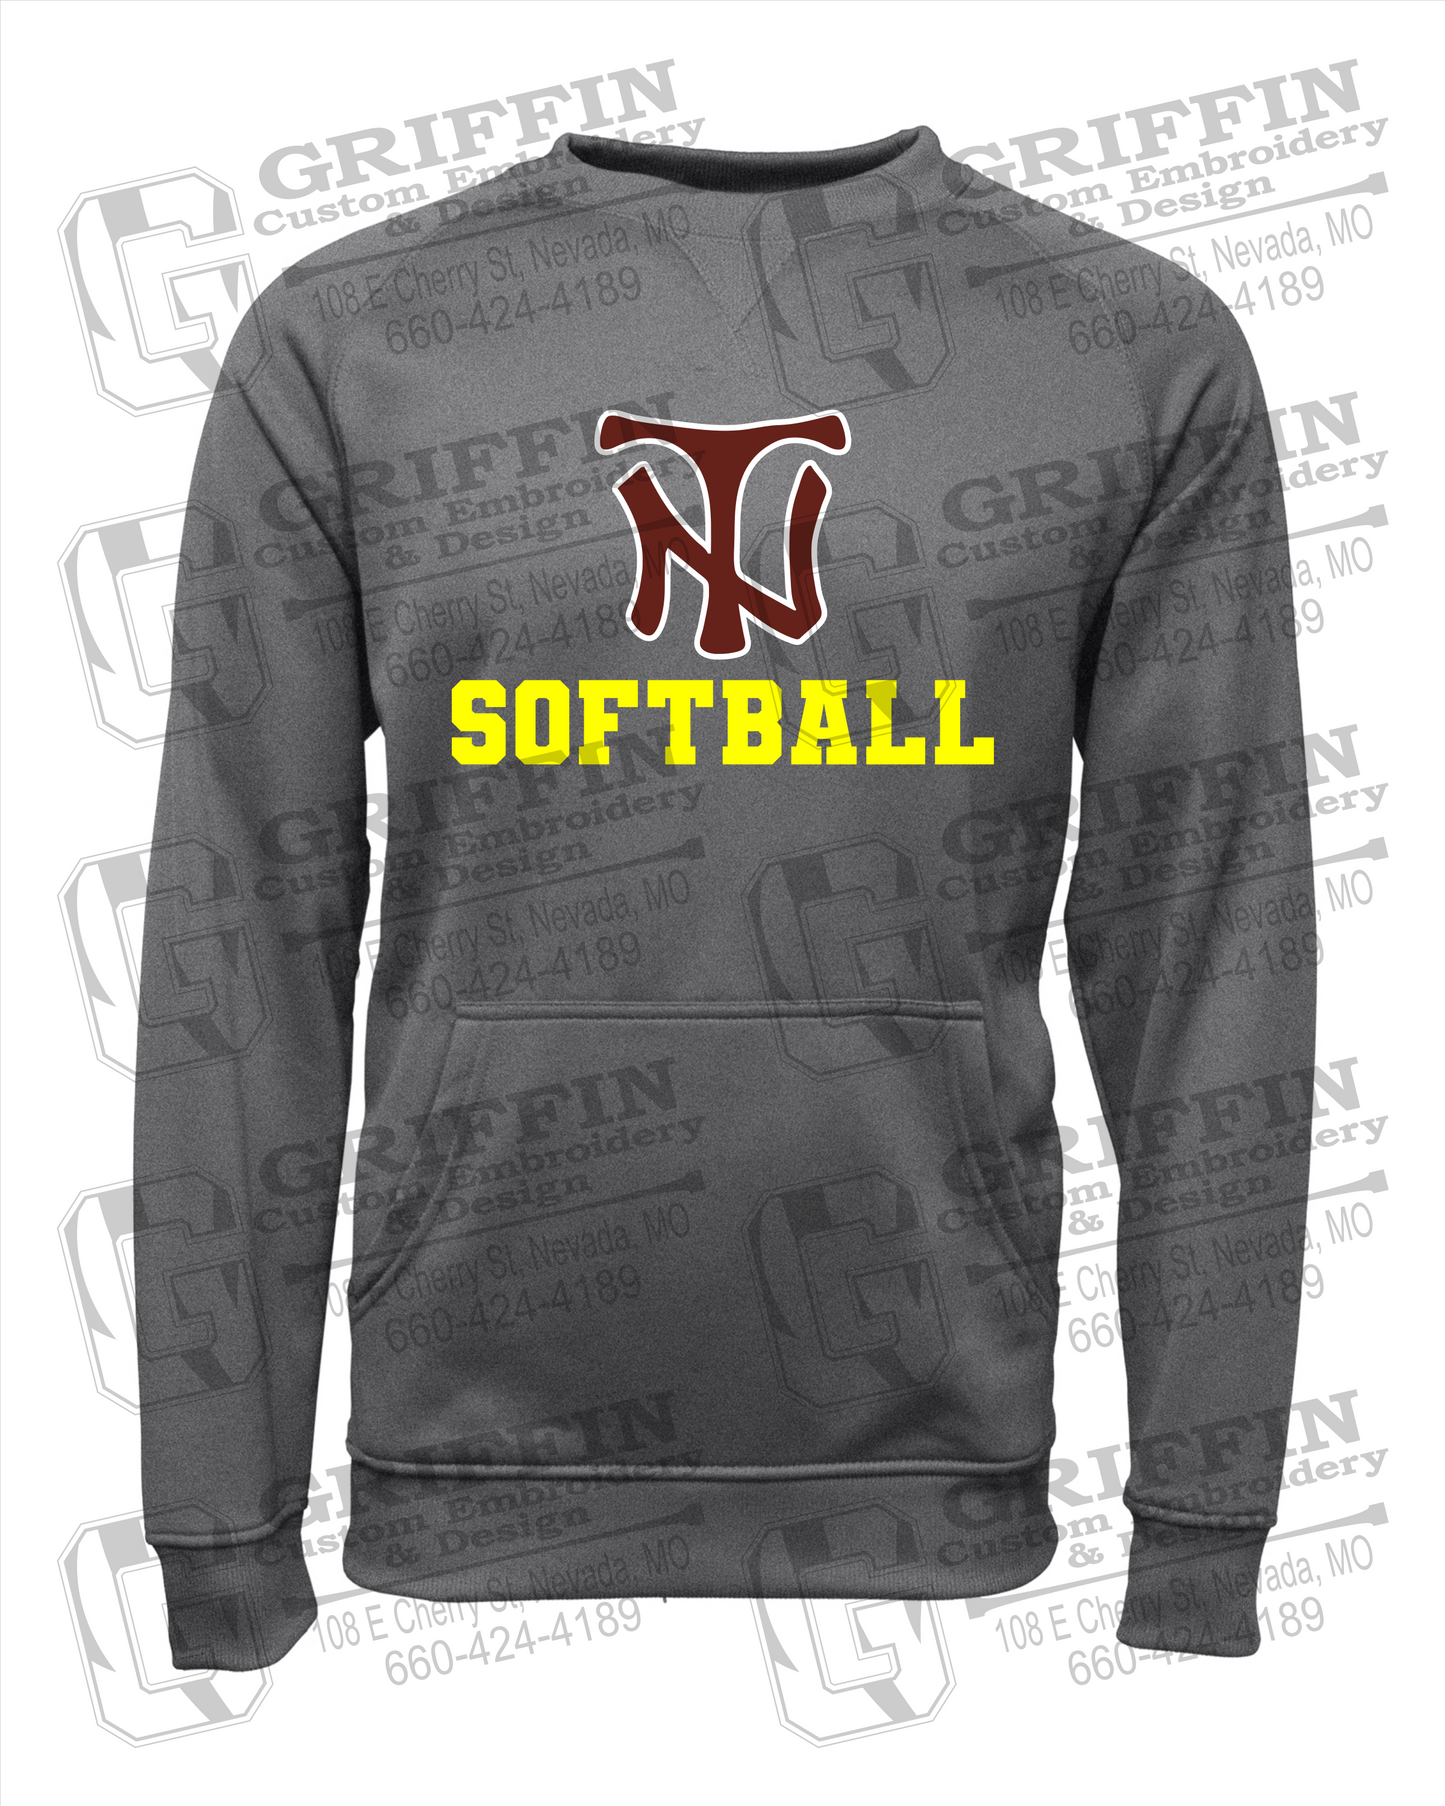 Nevada Tigers 24-C Youth Sweatshirt - Softball